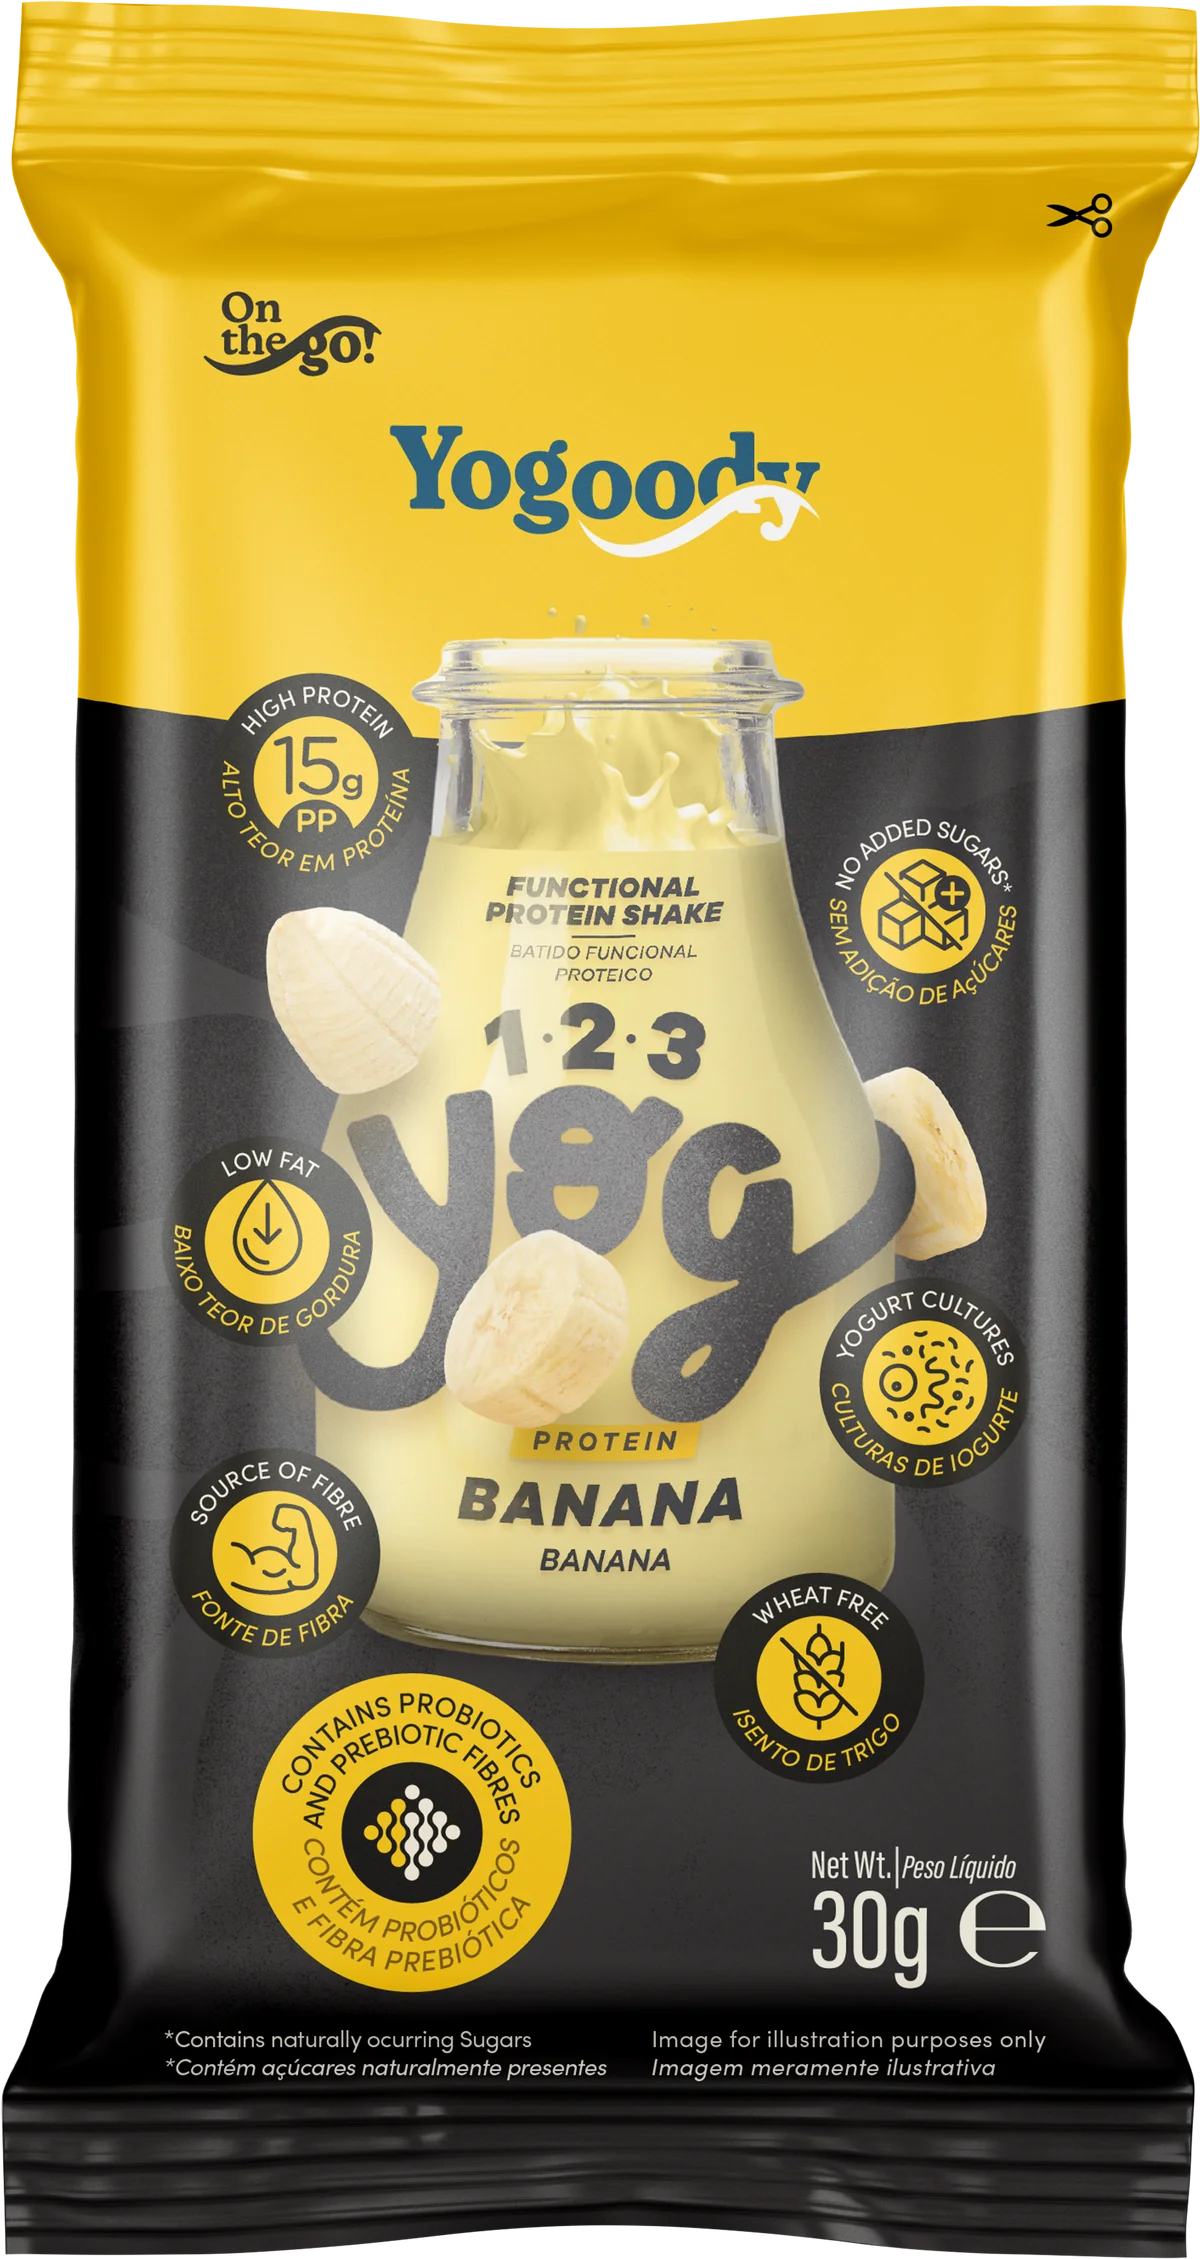 Welcome Pack - 1.2.3. YOG Protein Banana and Strawberry Shakes (10 x 30g sachets + FREE shaker)